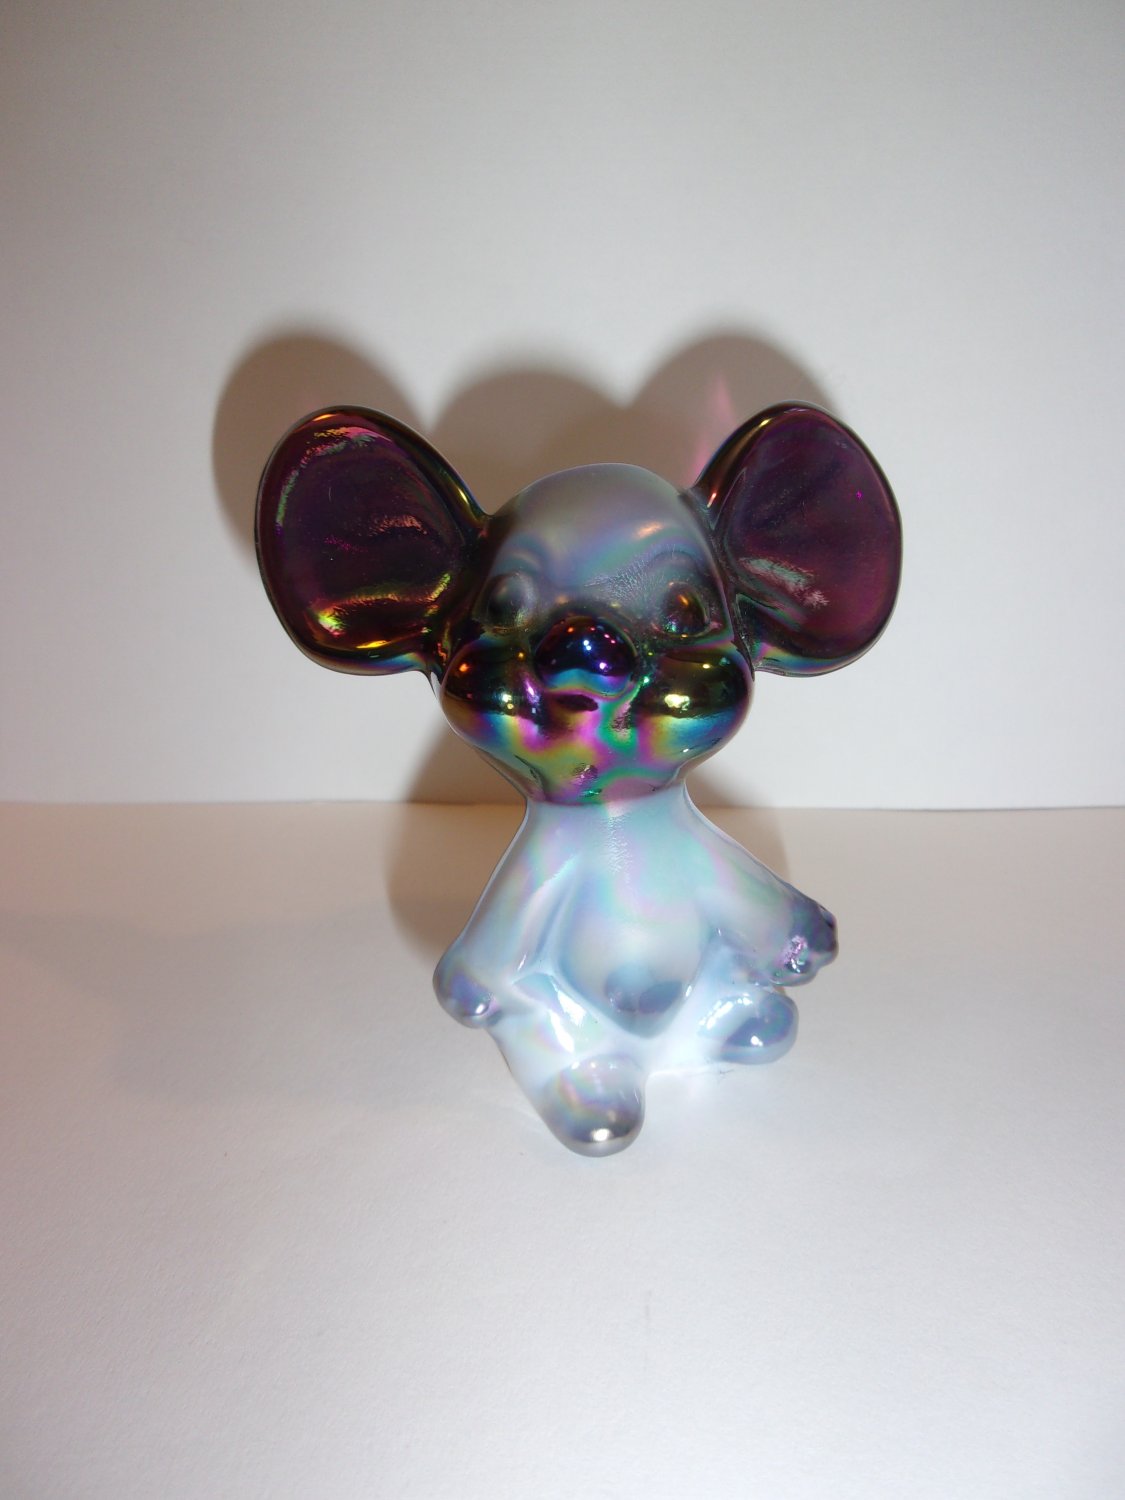 Fenton Glass Amethyst Purple & White Slag Carnival Iridized Mouse Figurine